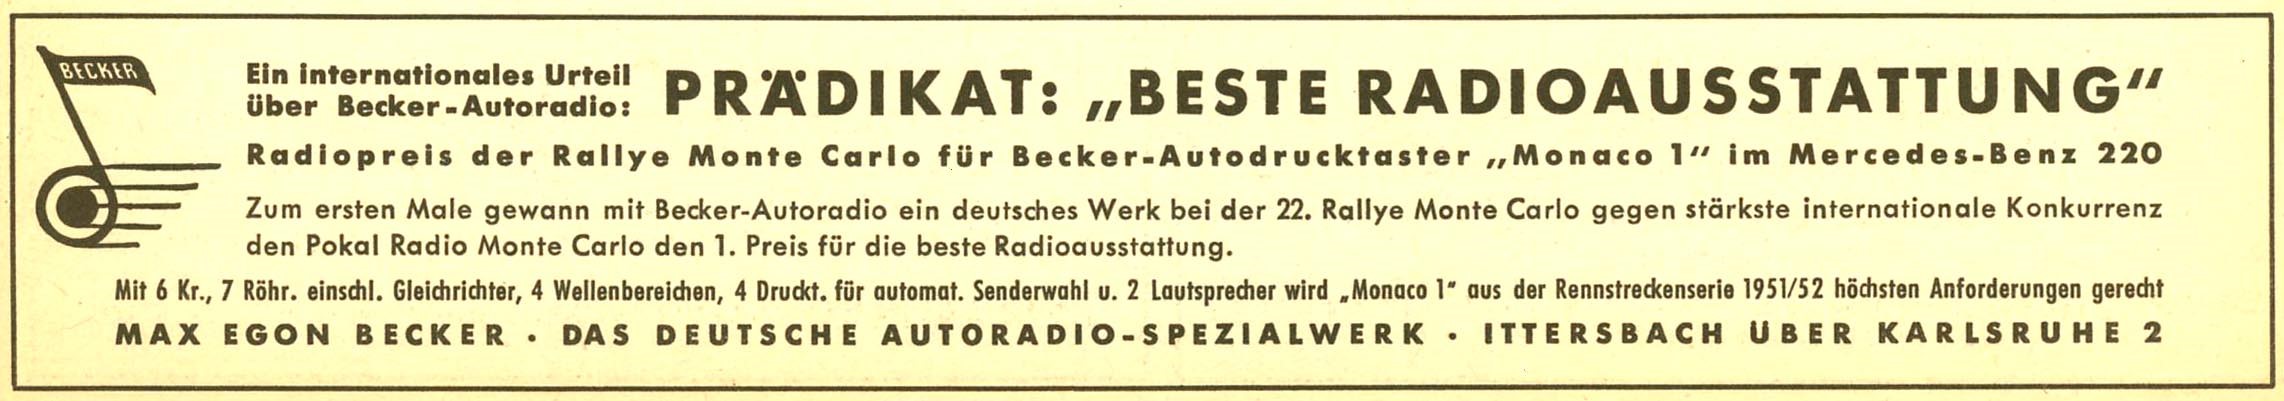 becker radio 3 0004